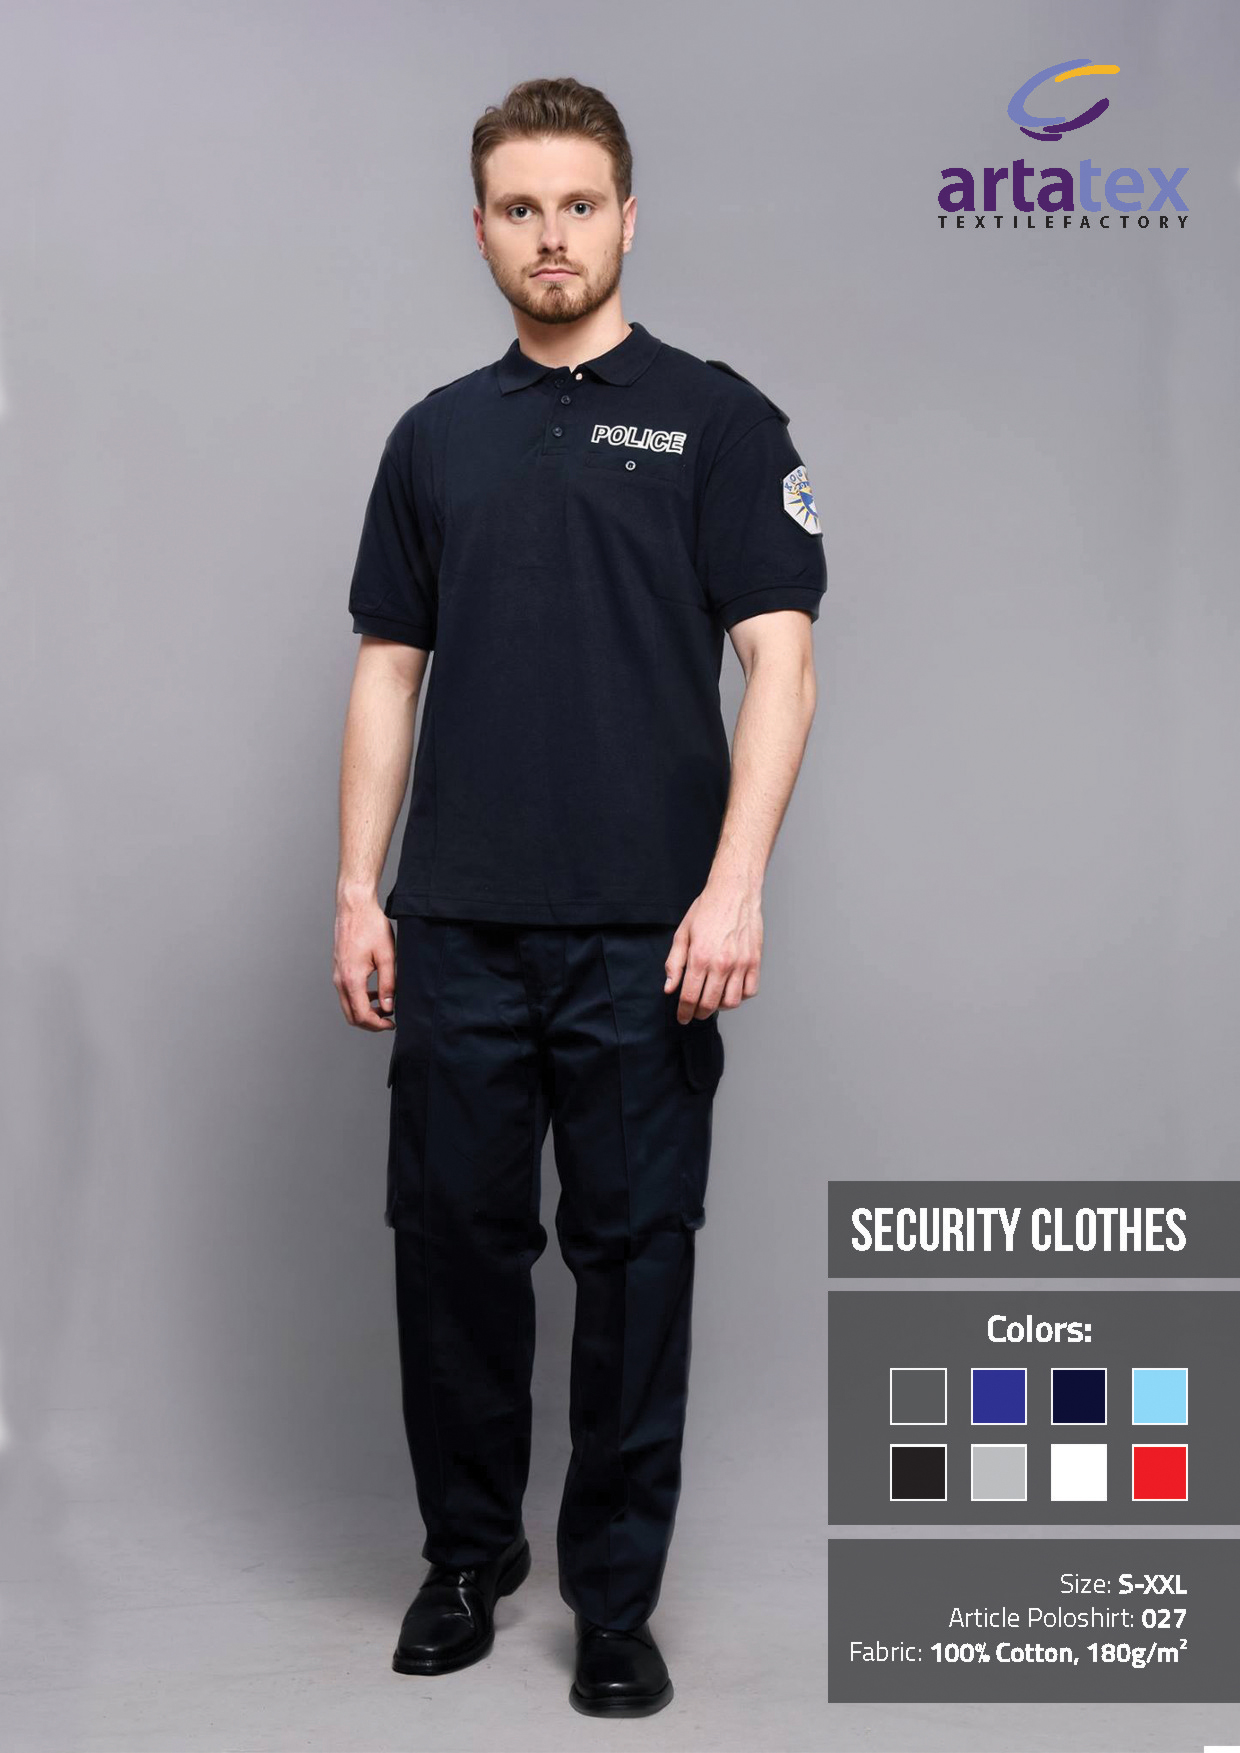 ArtaTex - Security Clothes